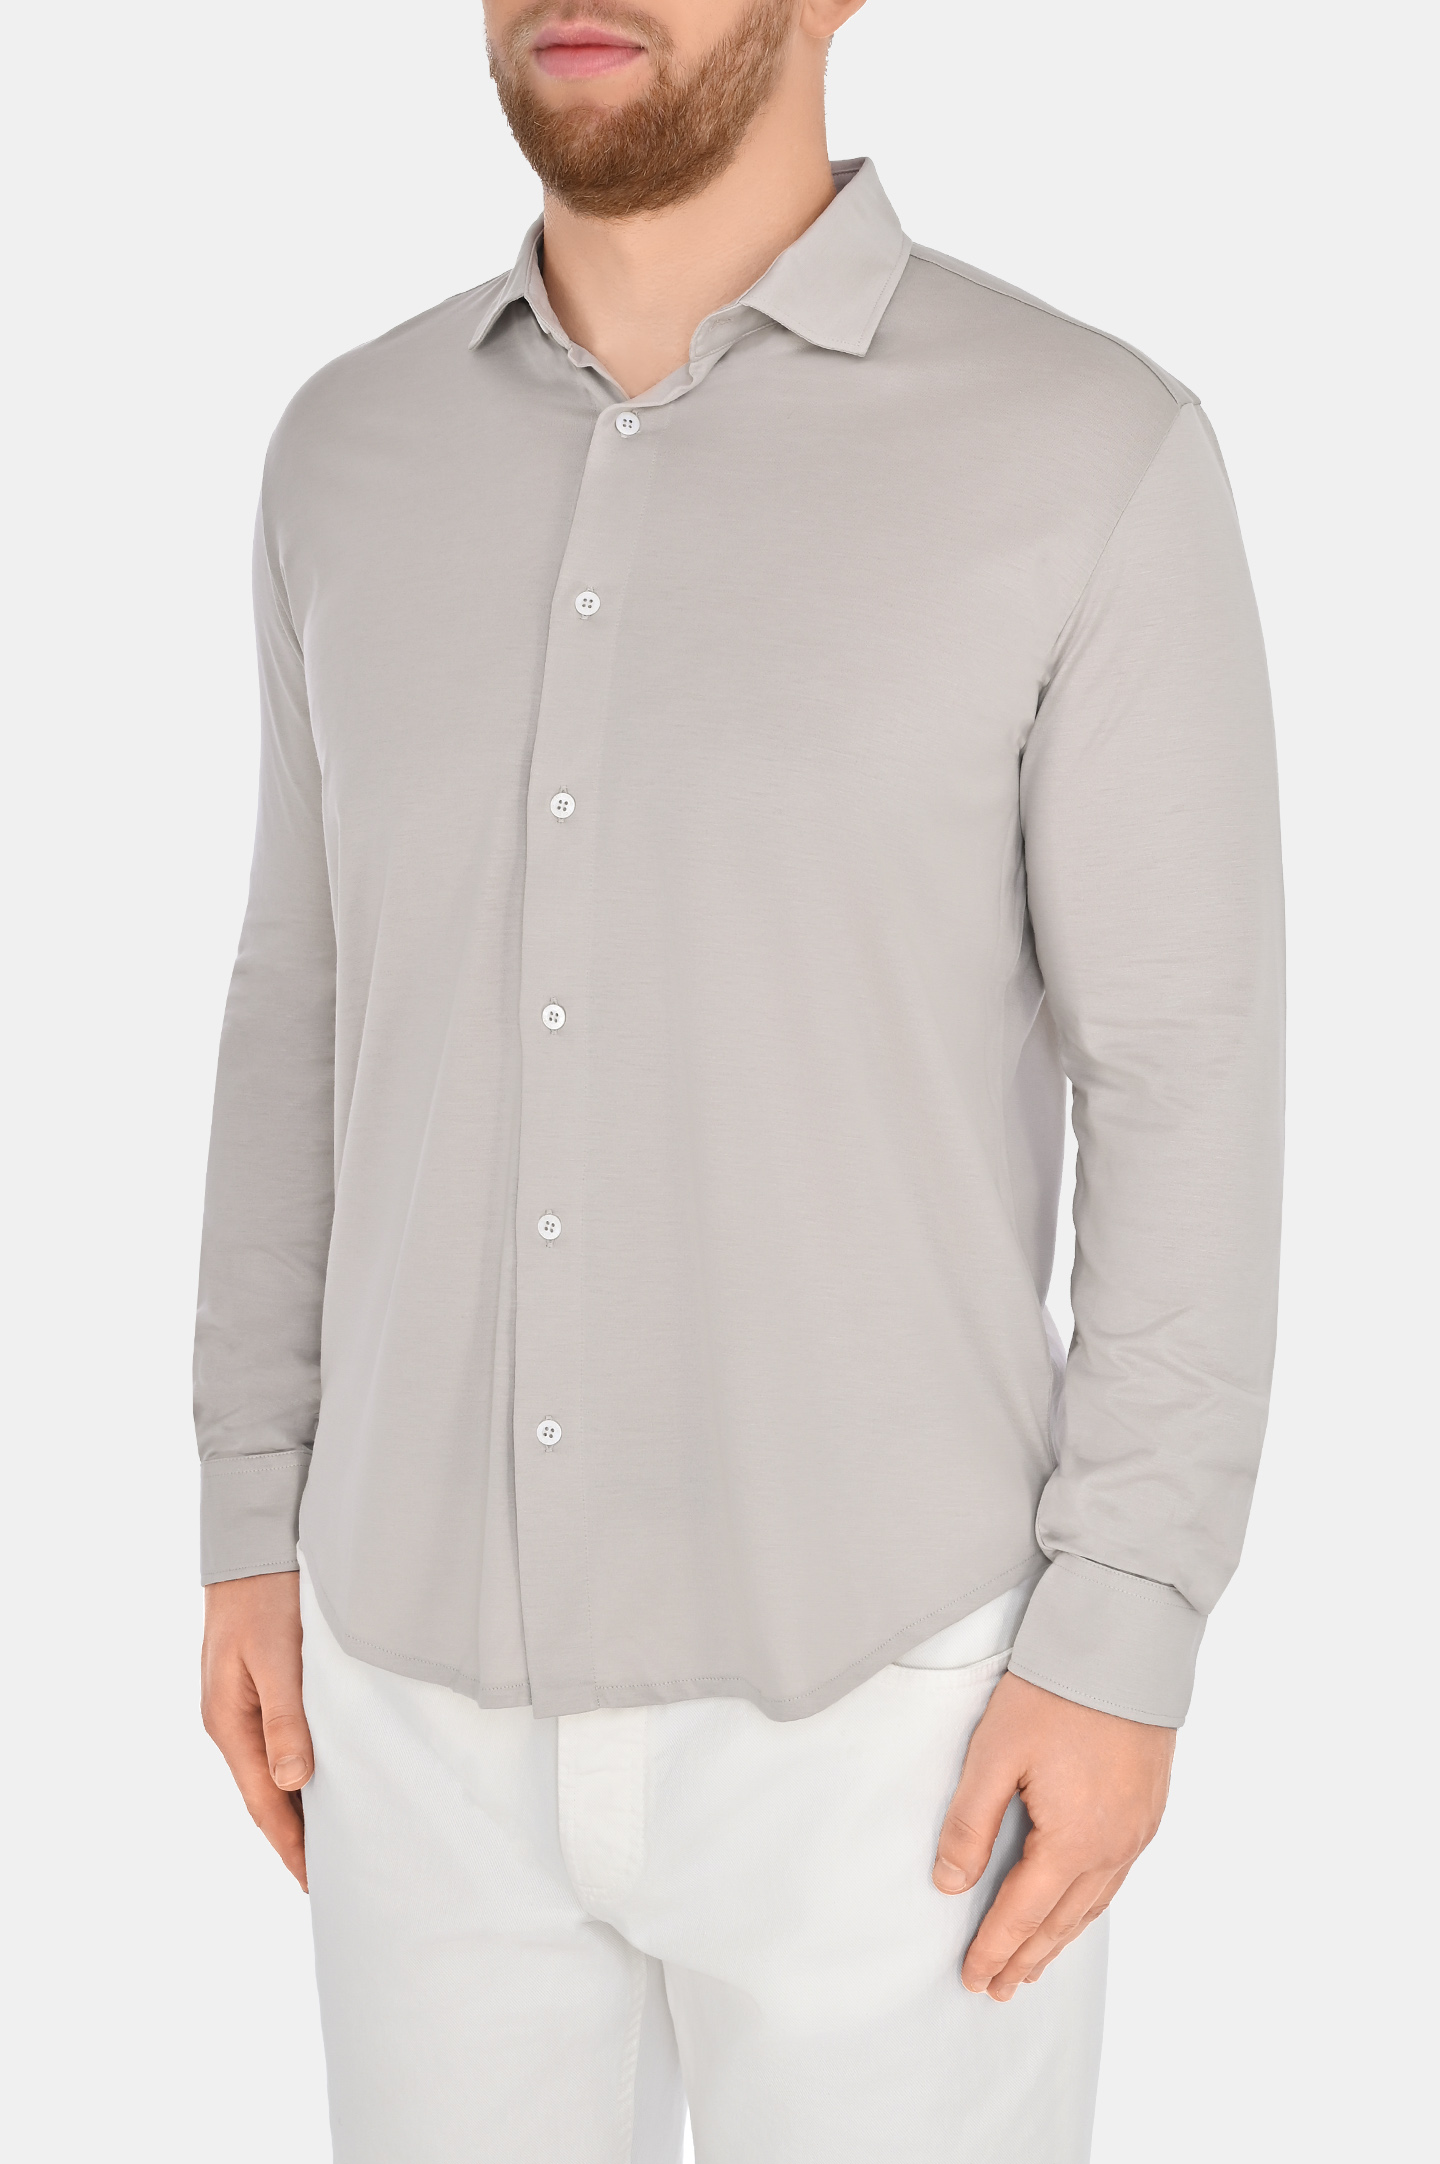 Рубашка из шелка и хлопка COLOMBO TS00382/-/A00897, цвет: Светло-бежевый, Мужской